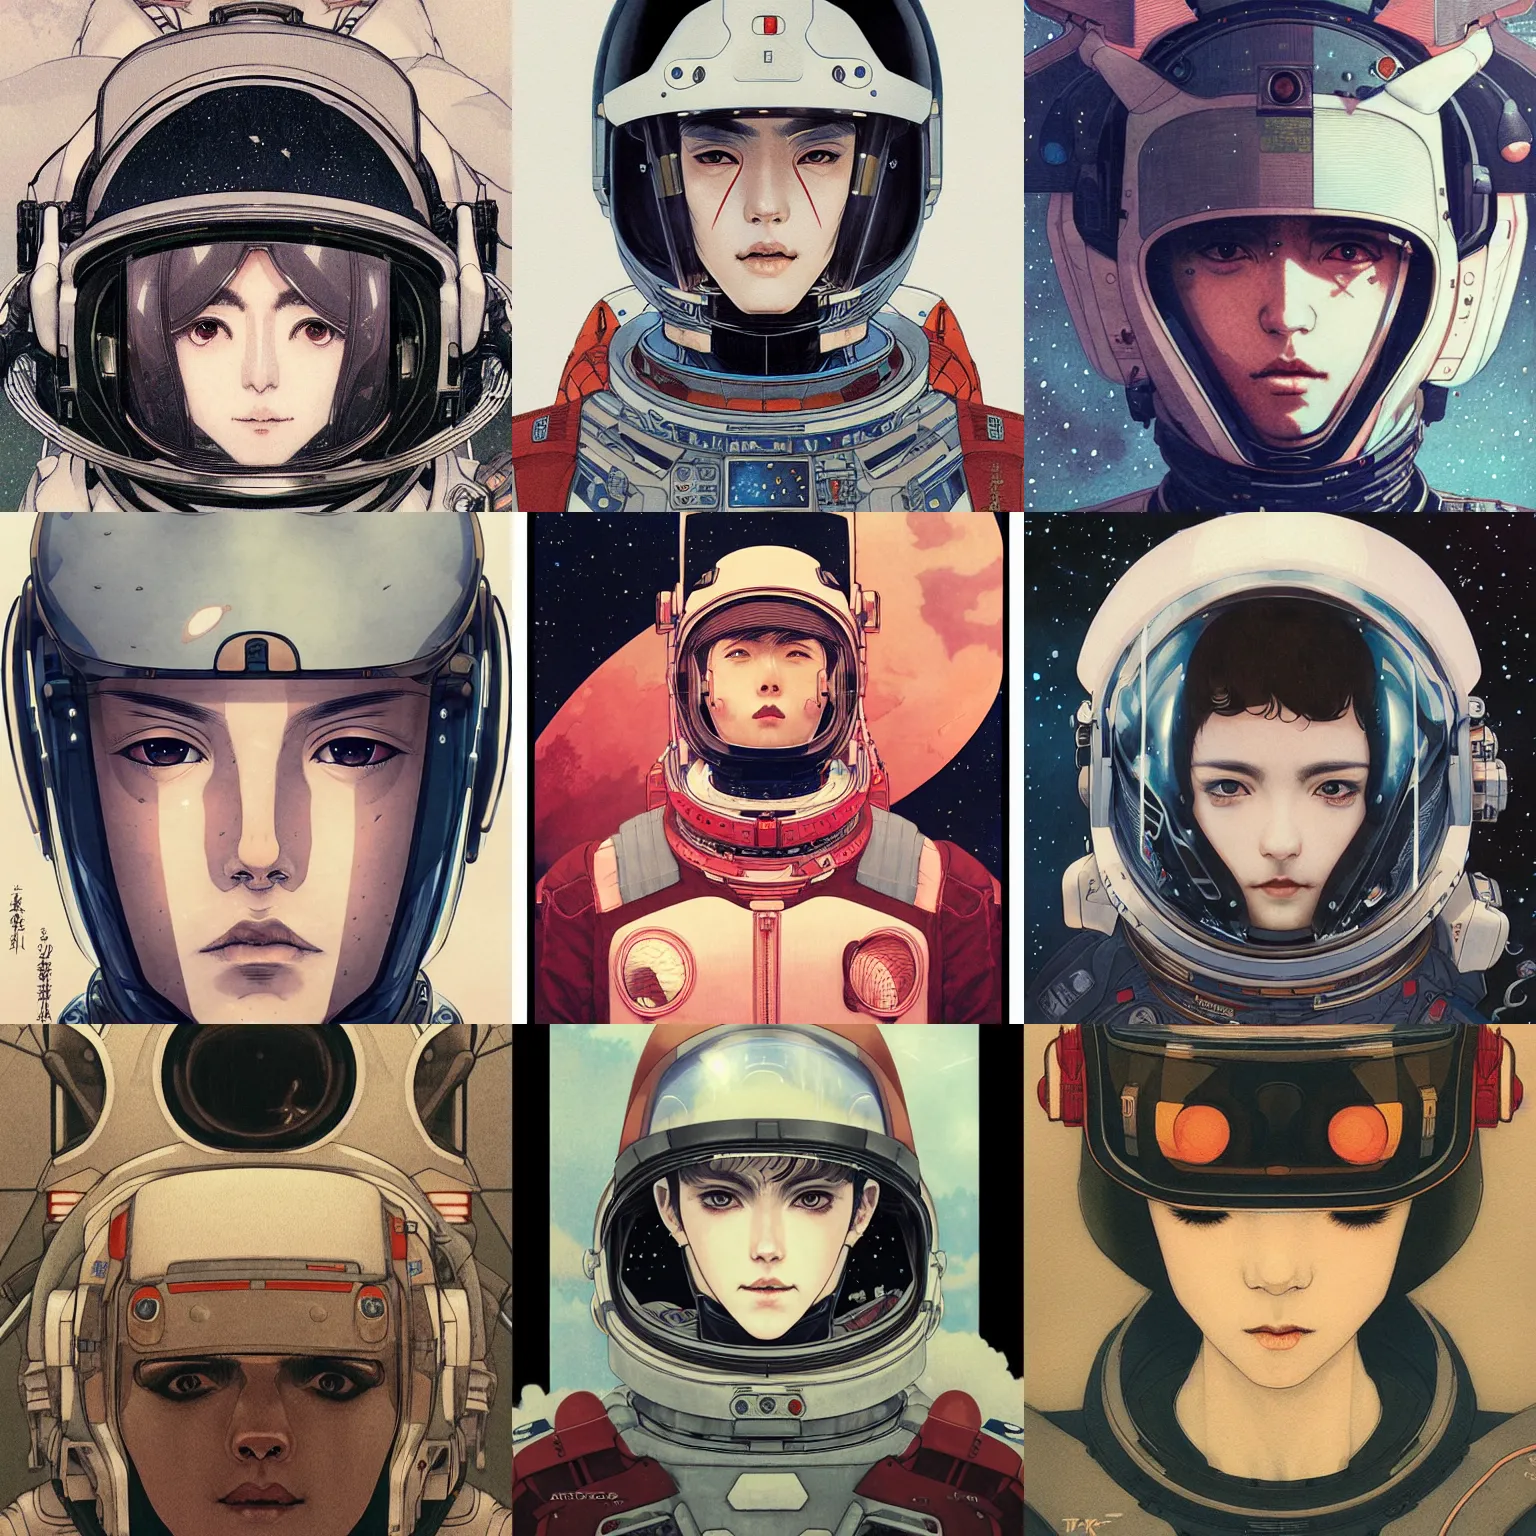 Prompt: space pilot by takato yamamoto, symmetrical close up portrait, concept art, by wlop, artgerm, krenz cushart, greg rutkowski, pixiv